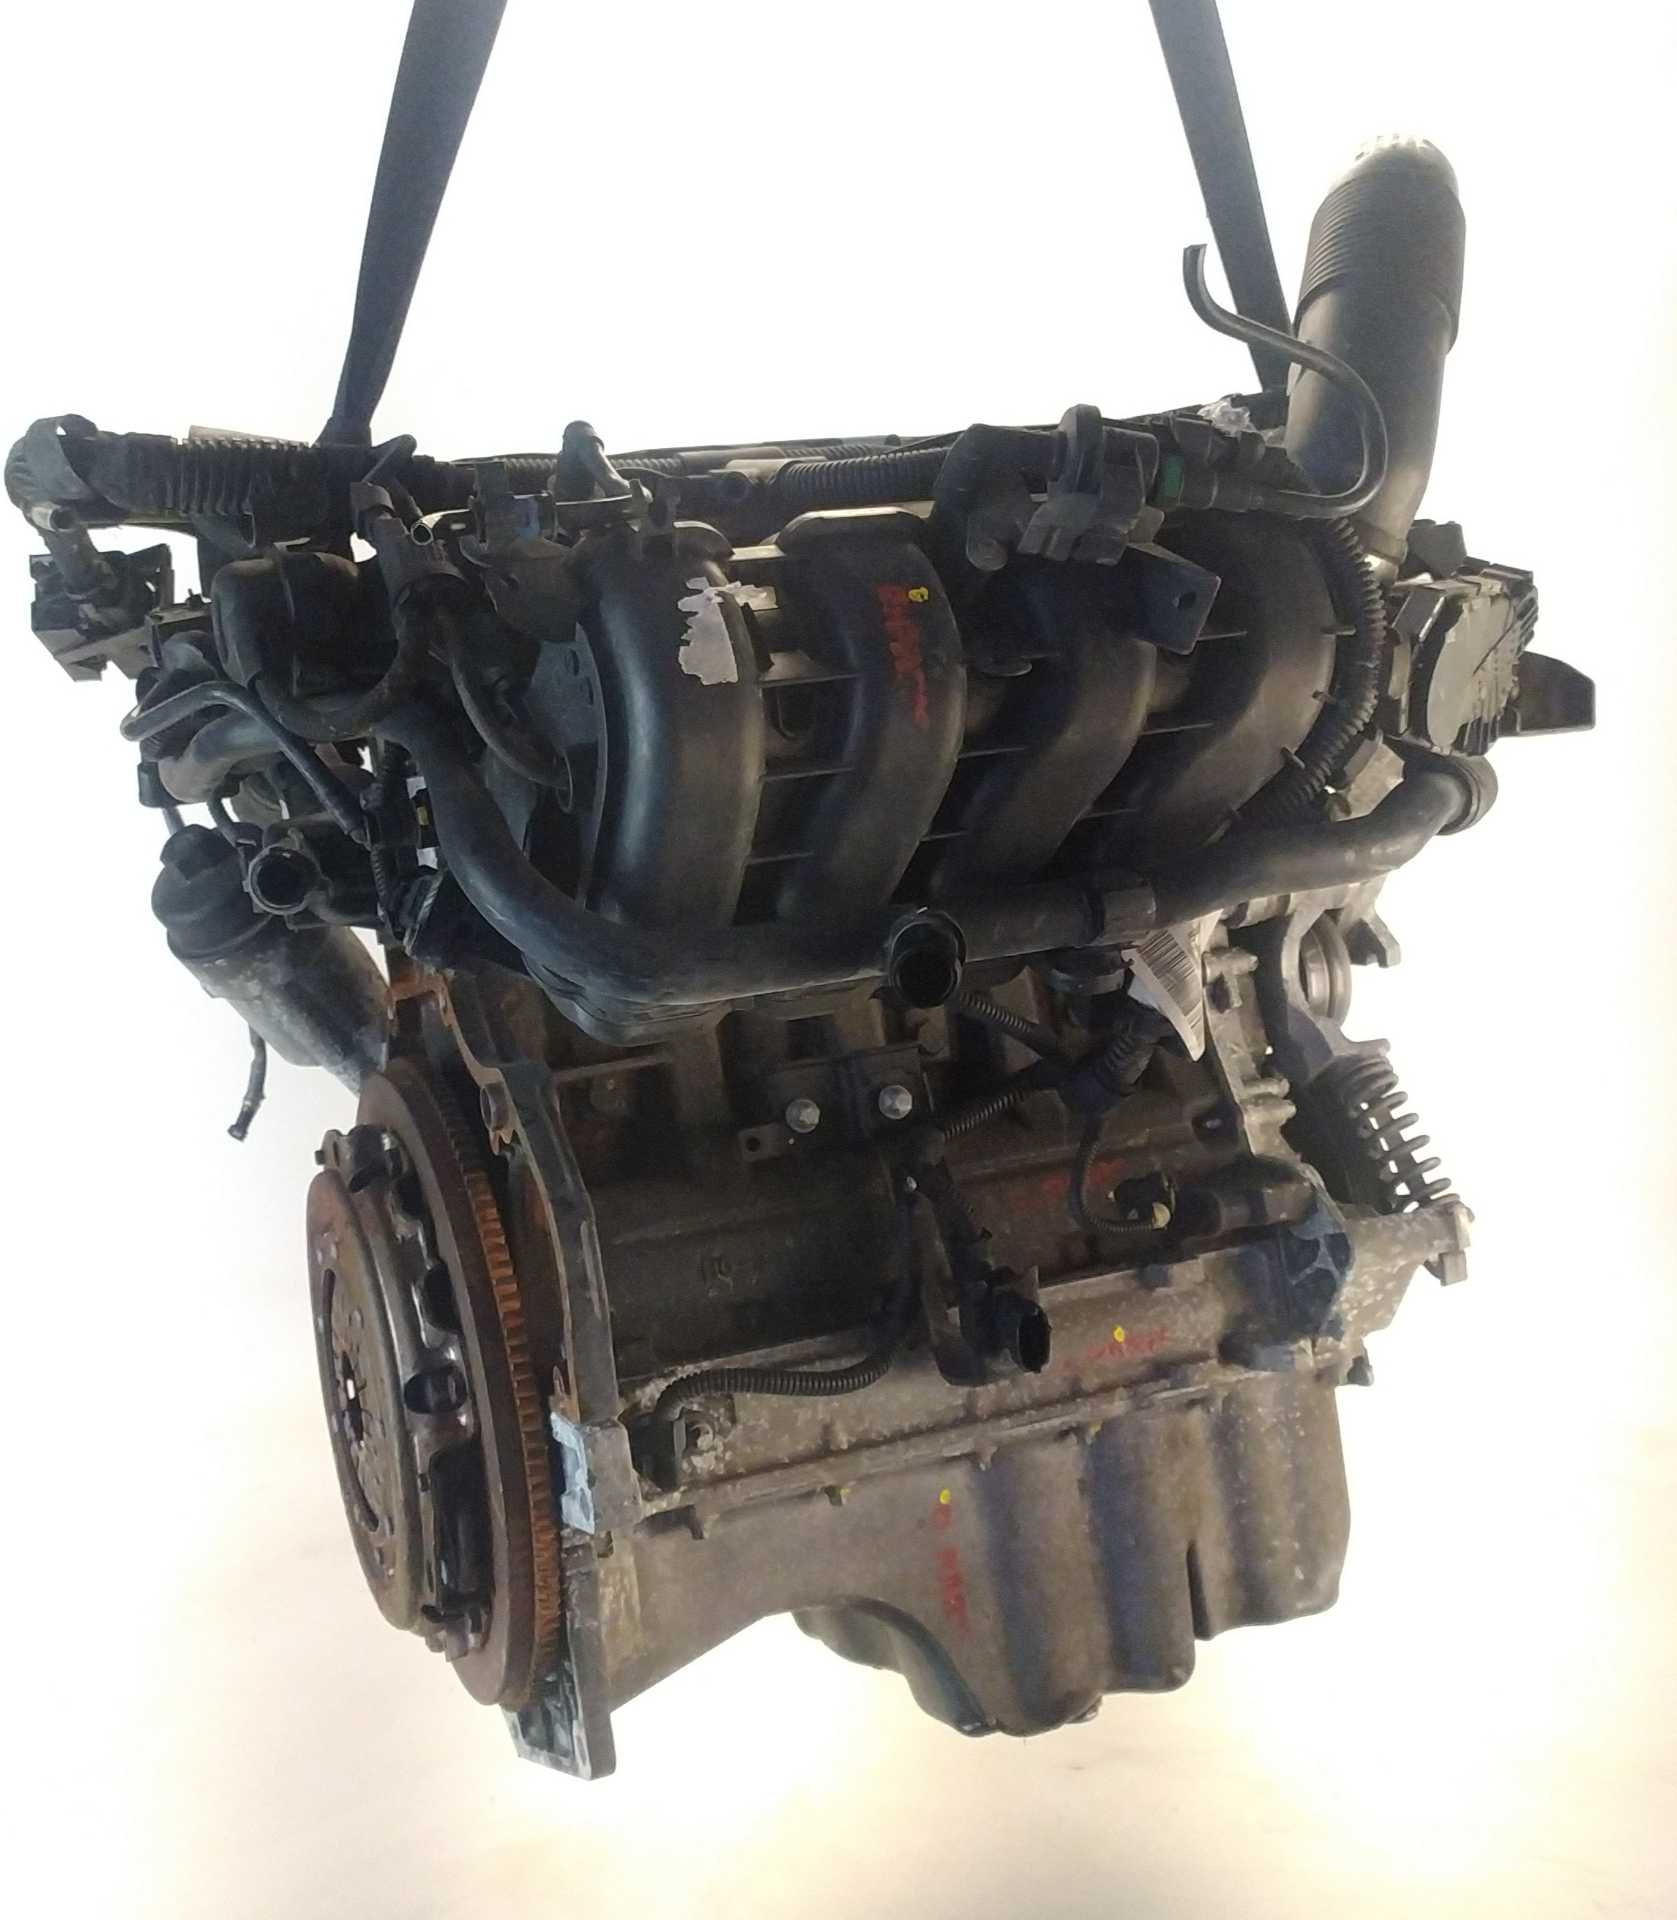 MOTOR OPEL CORSA D 1.4 (L08, L68) (88 KW / 120 CV) (07.2012 – 08.2014)